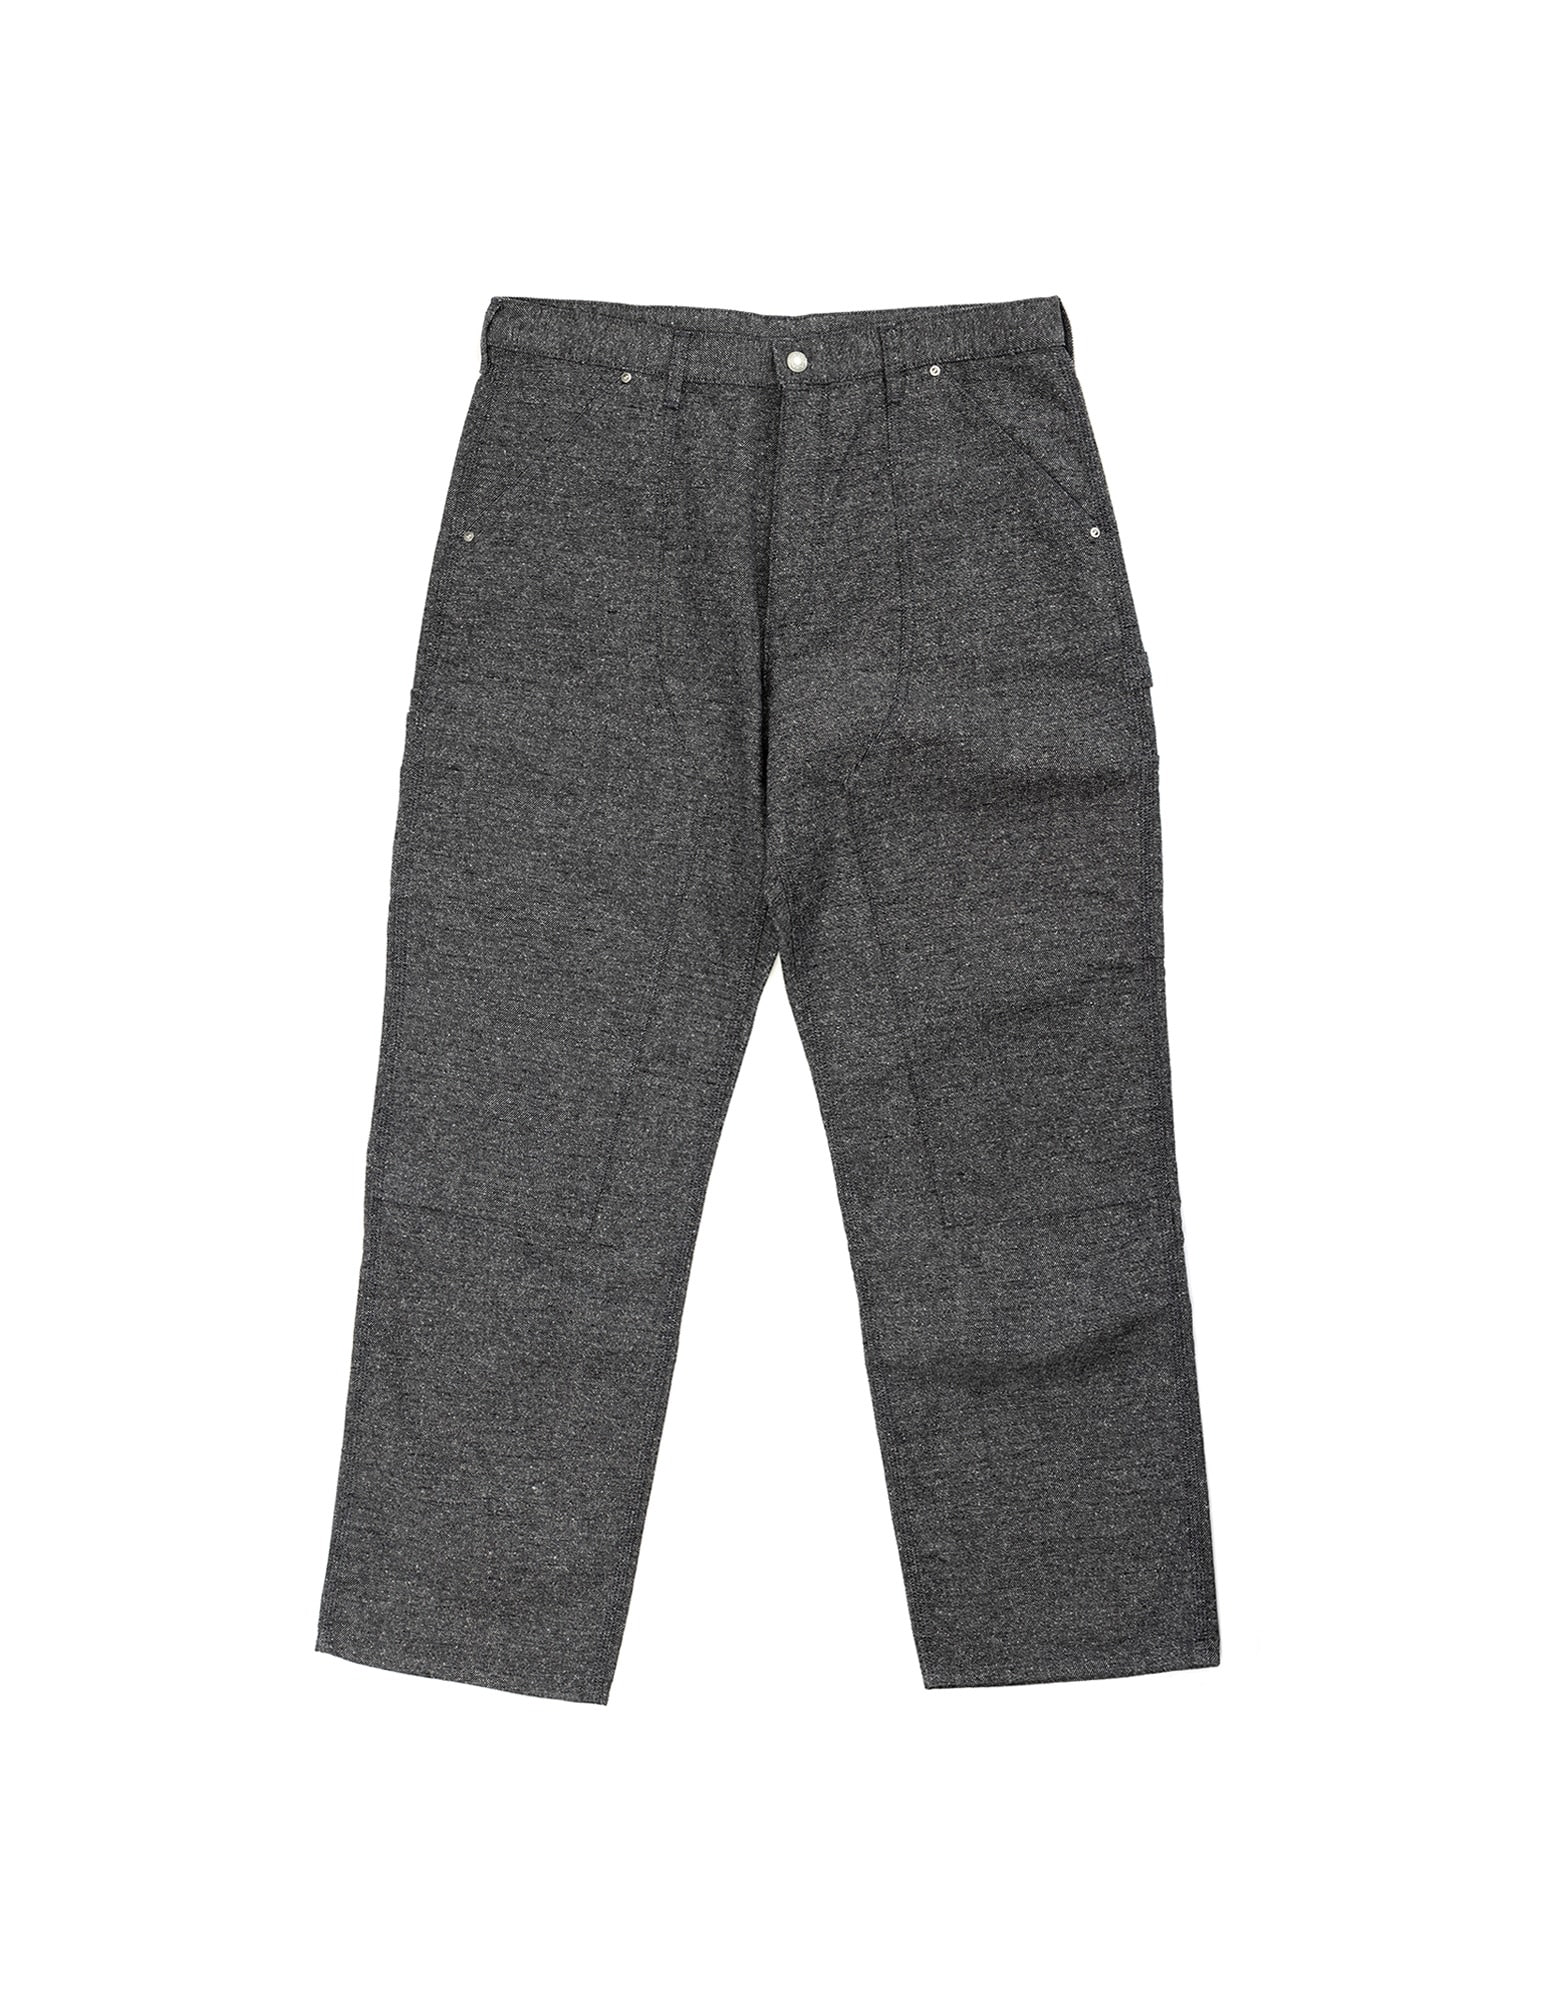 23W-PDWP1 Double Knee Carpenter Pants (Gray)